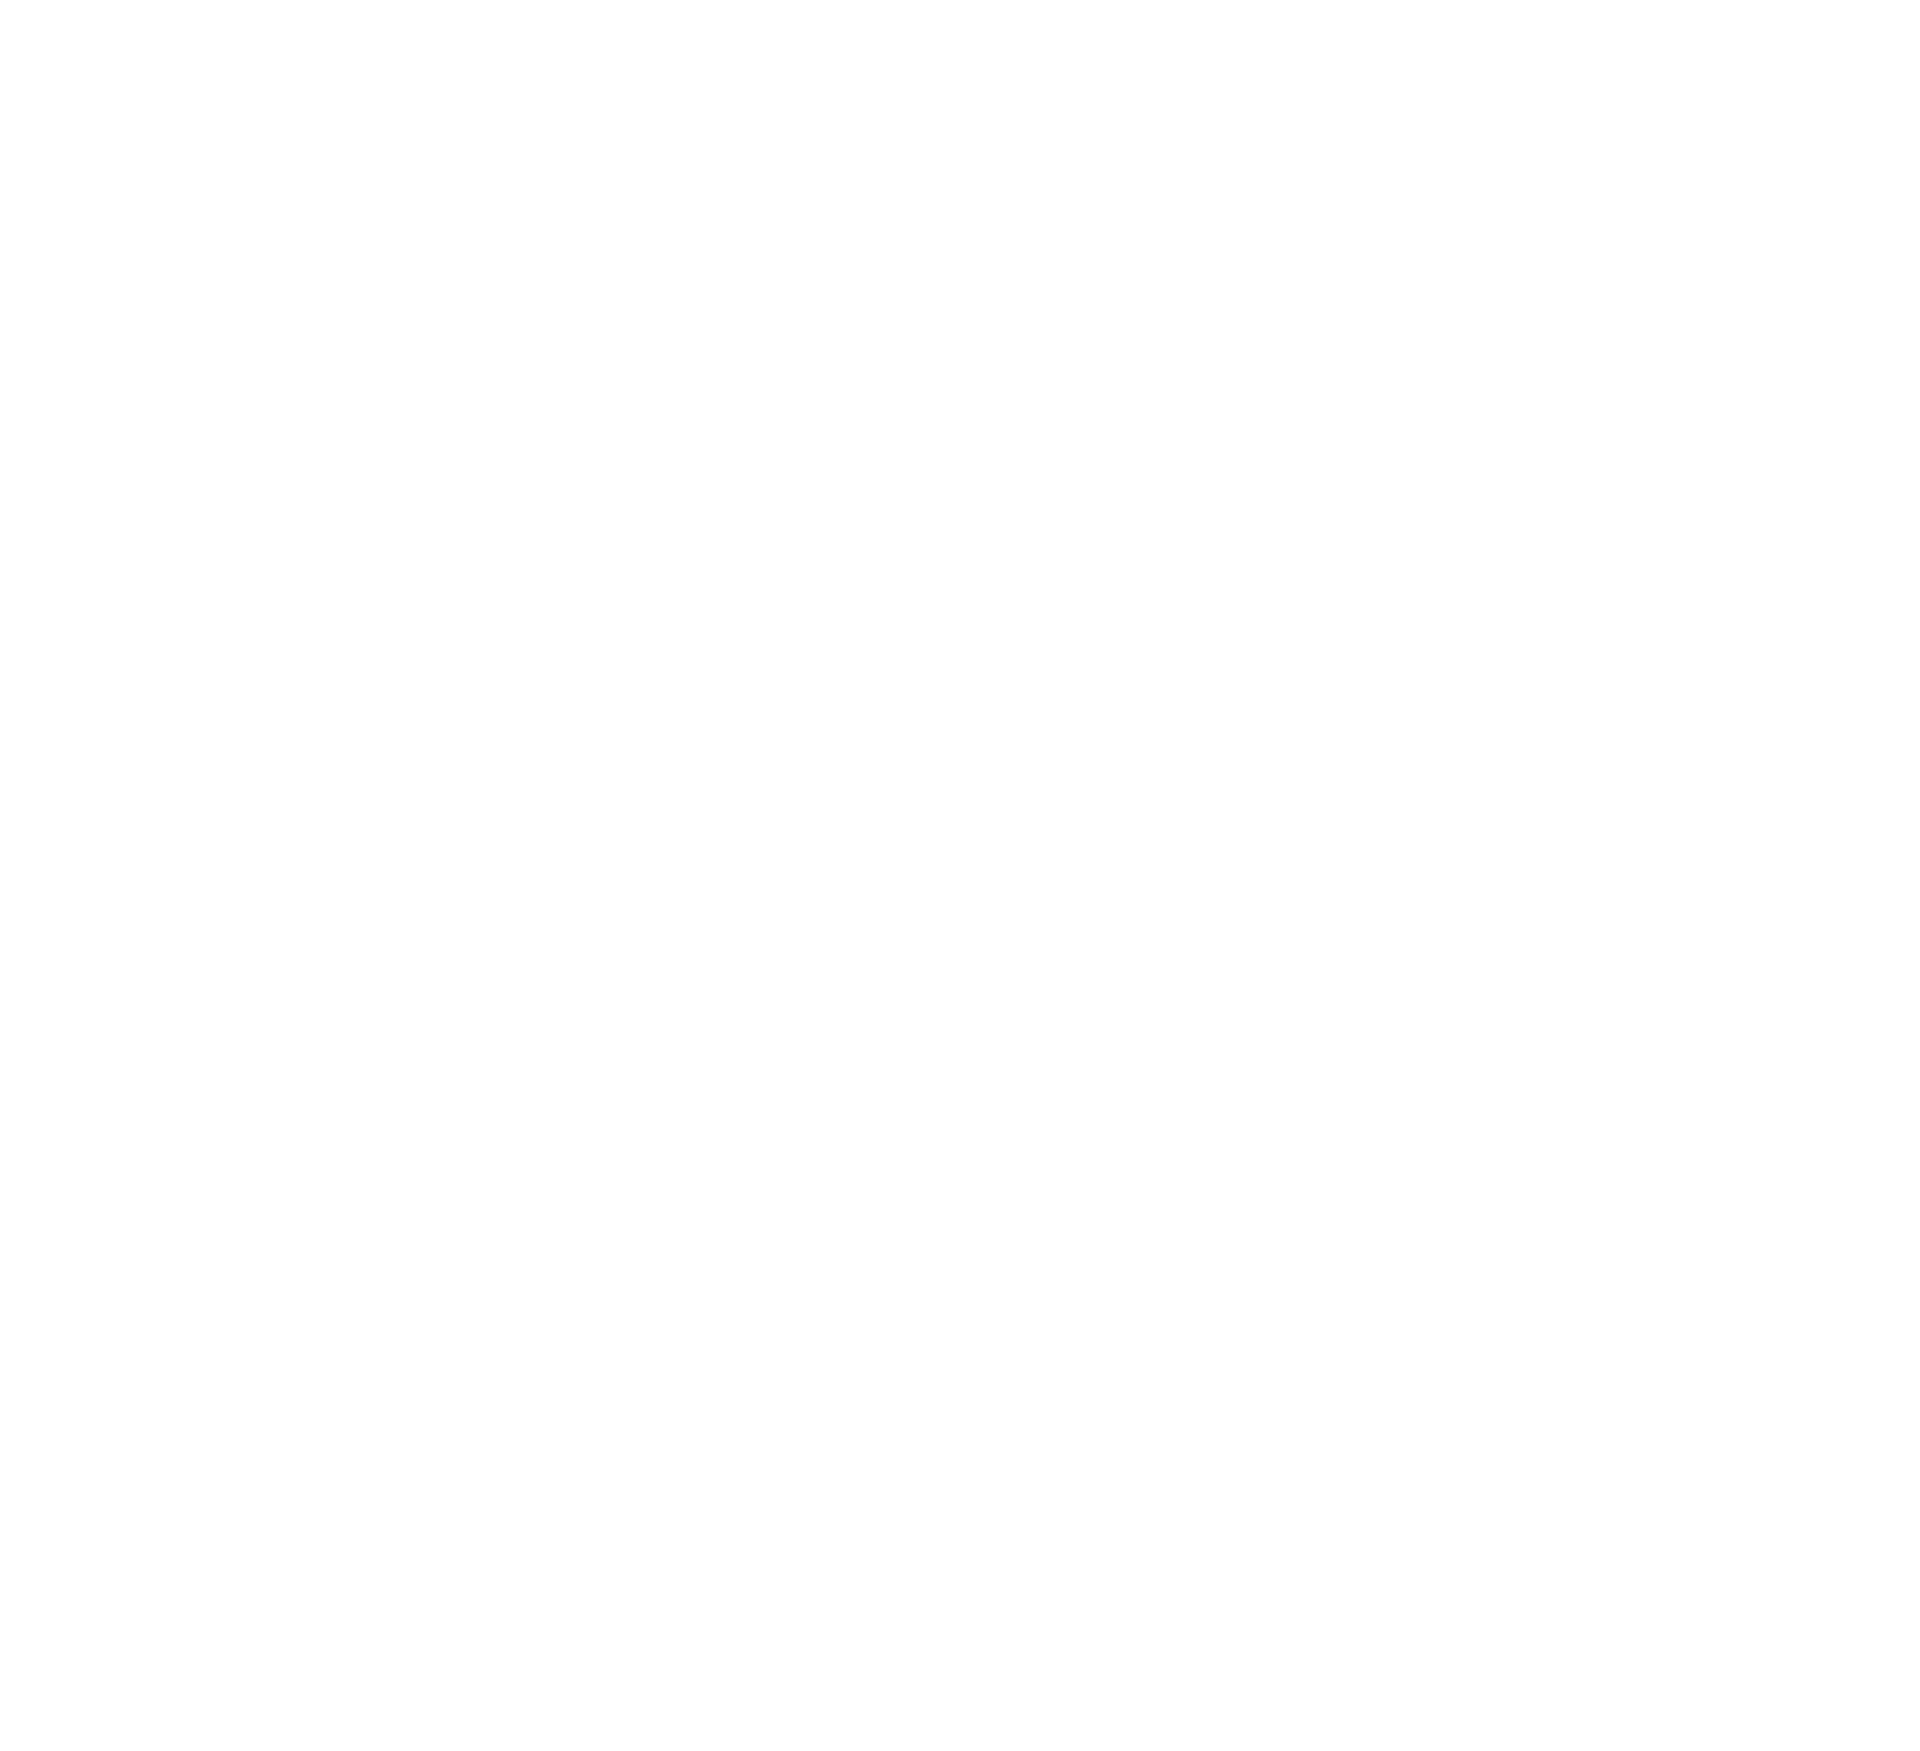 St. Margaret's College Foundation